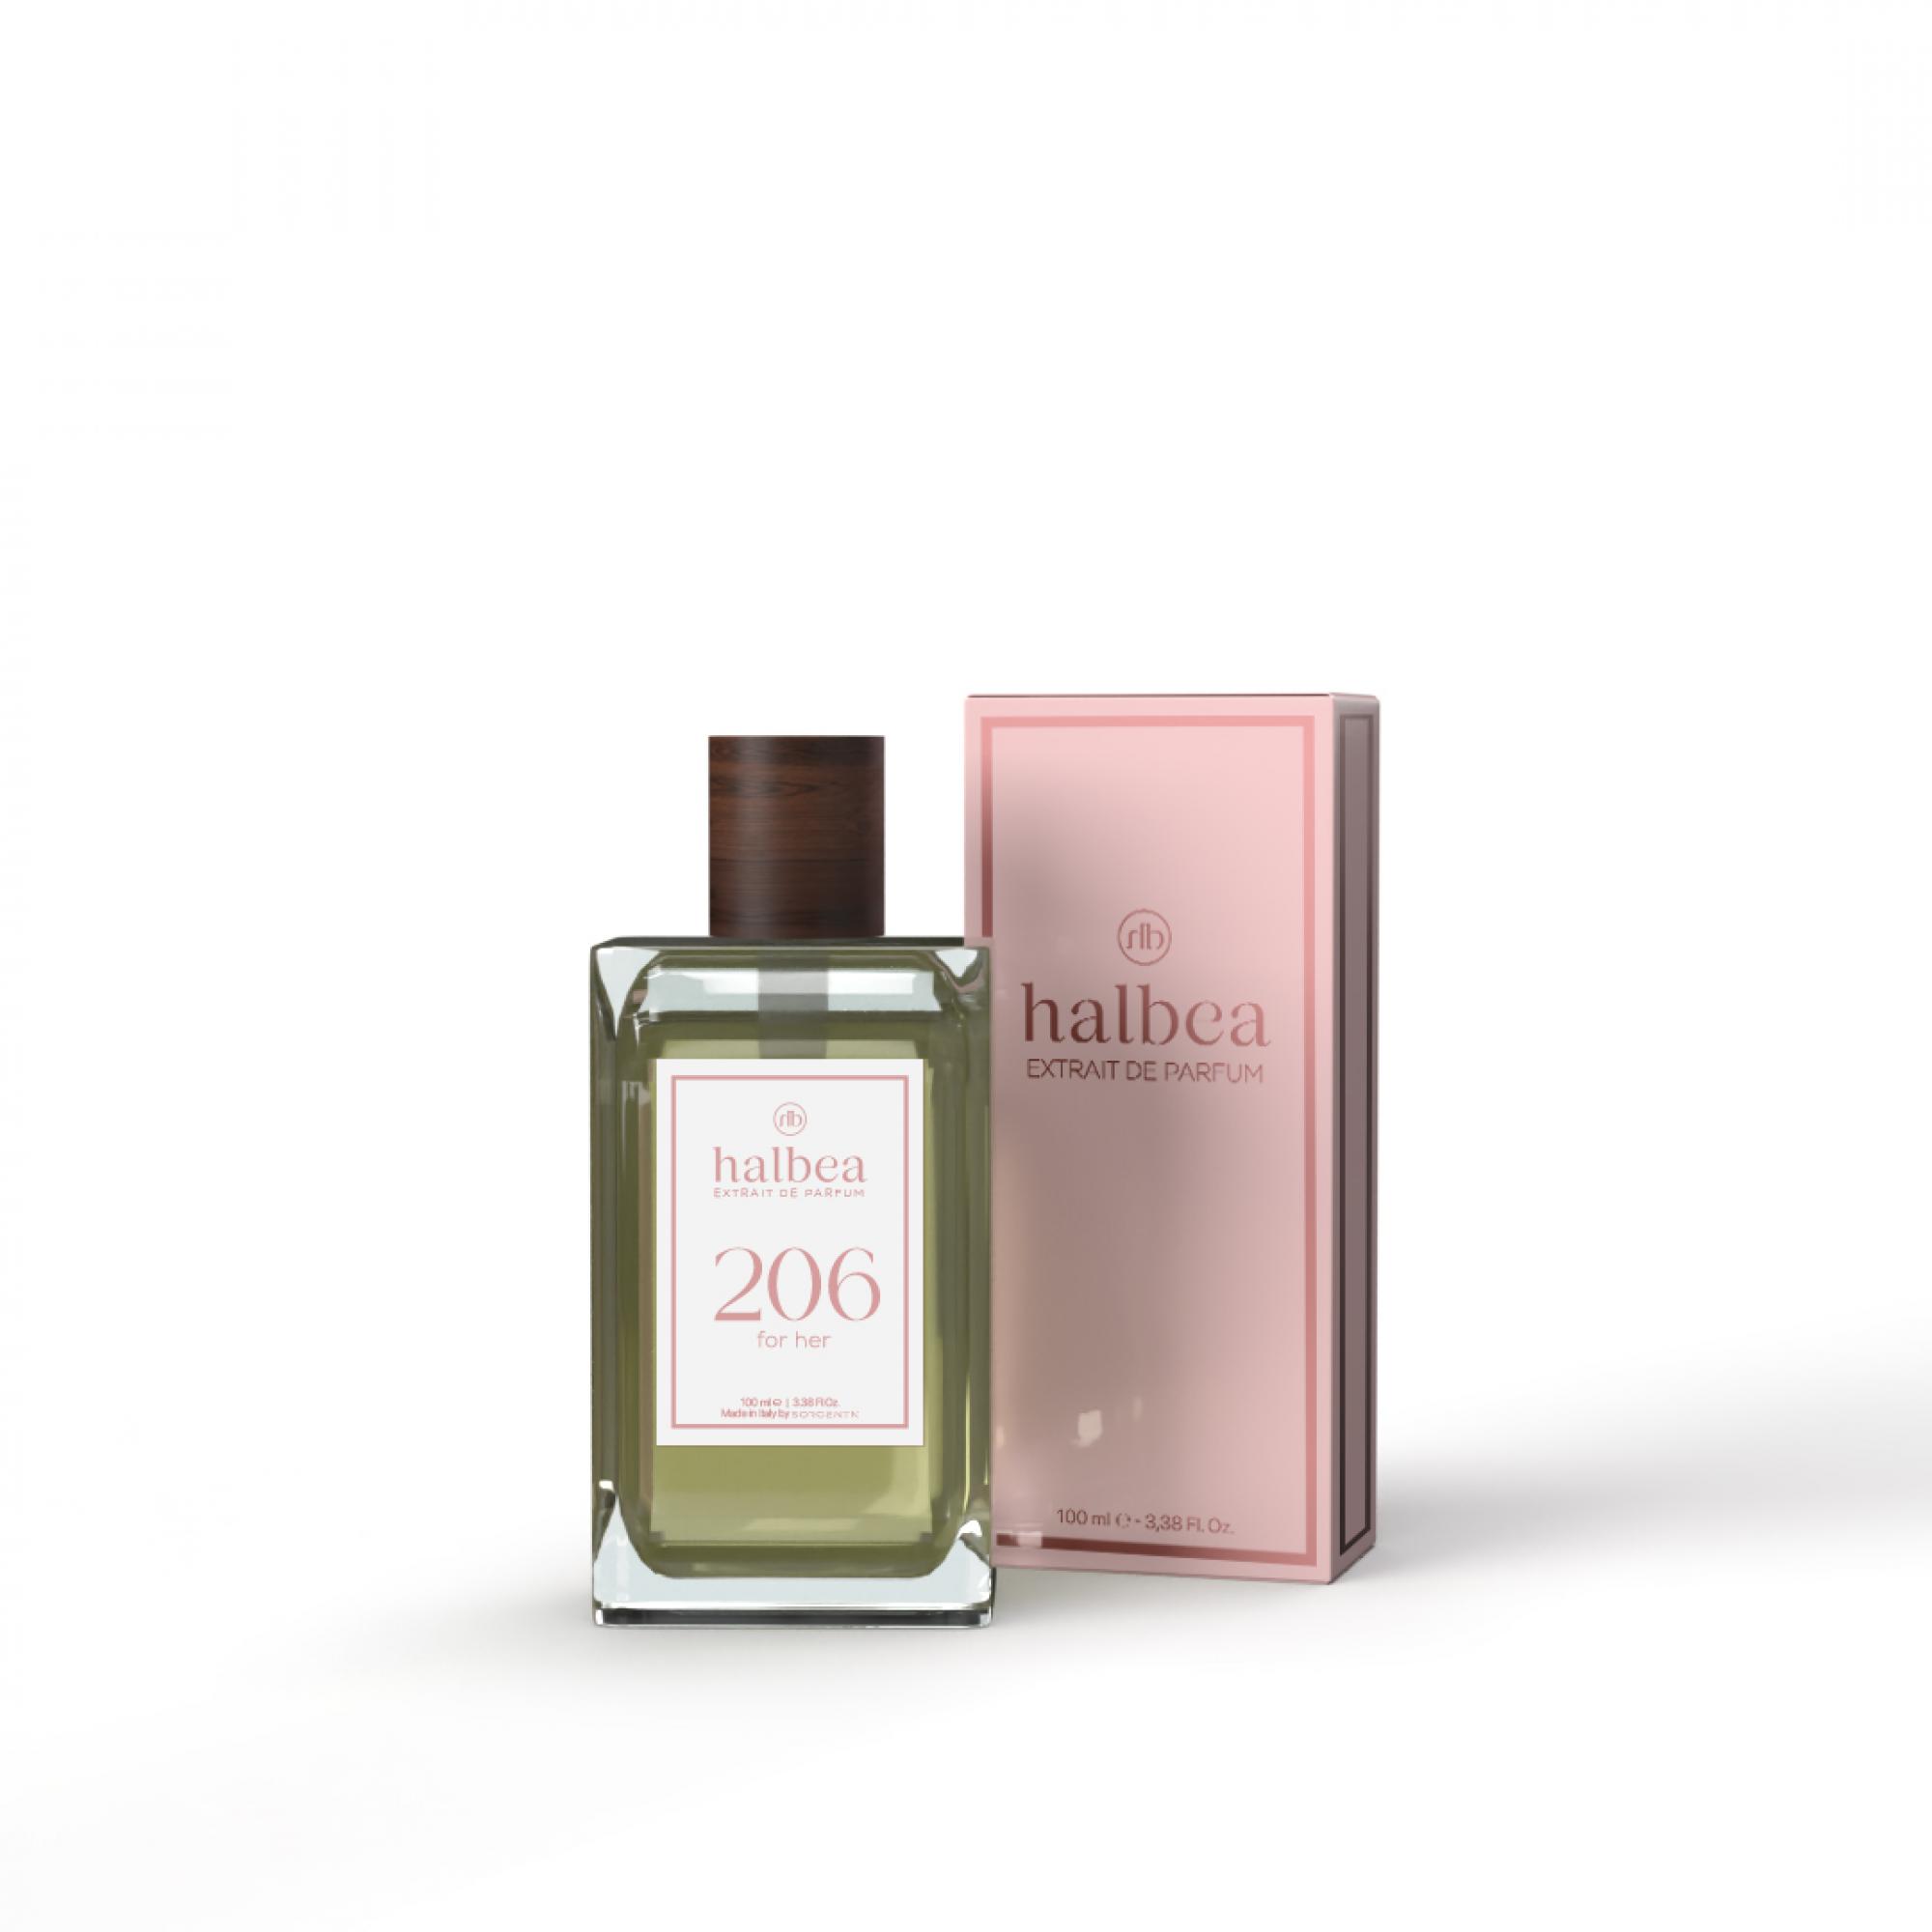 Halbea Parfum Nr. 206 insp. by Lancôme Trésor Sorgenta 100ml